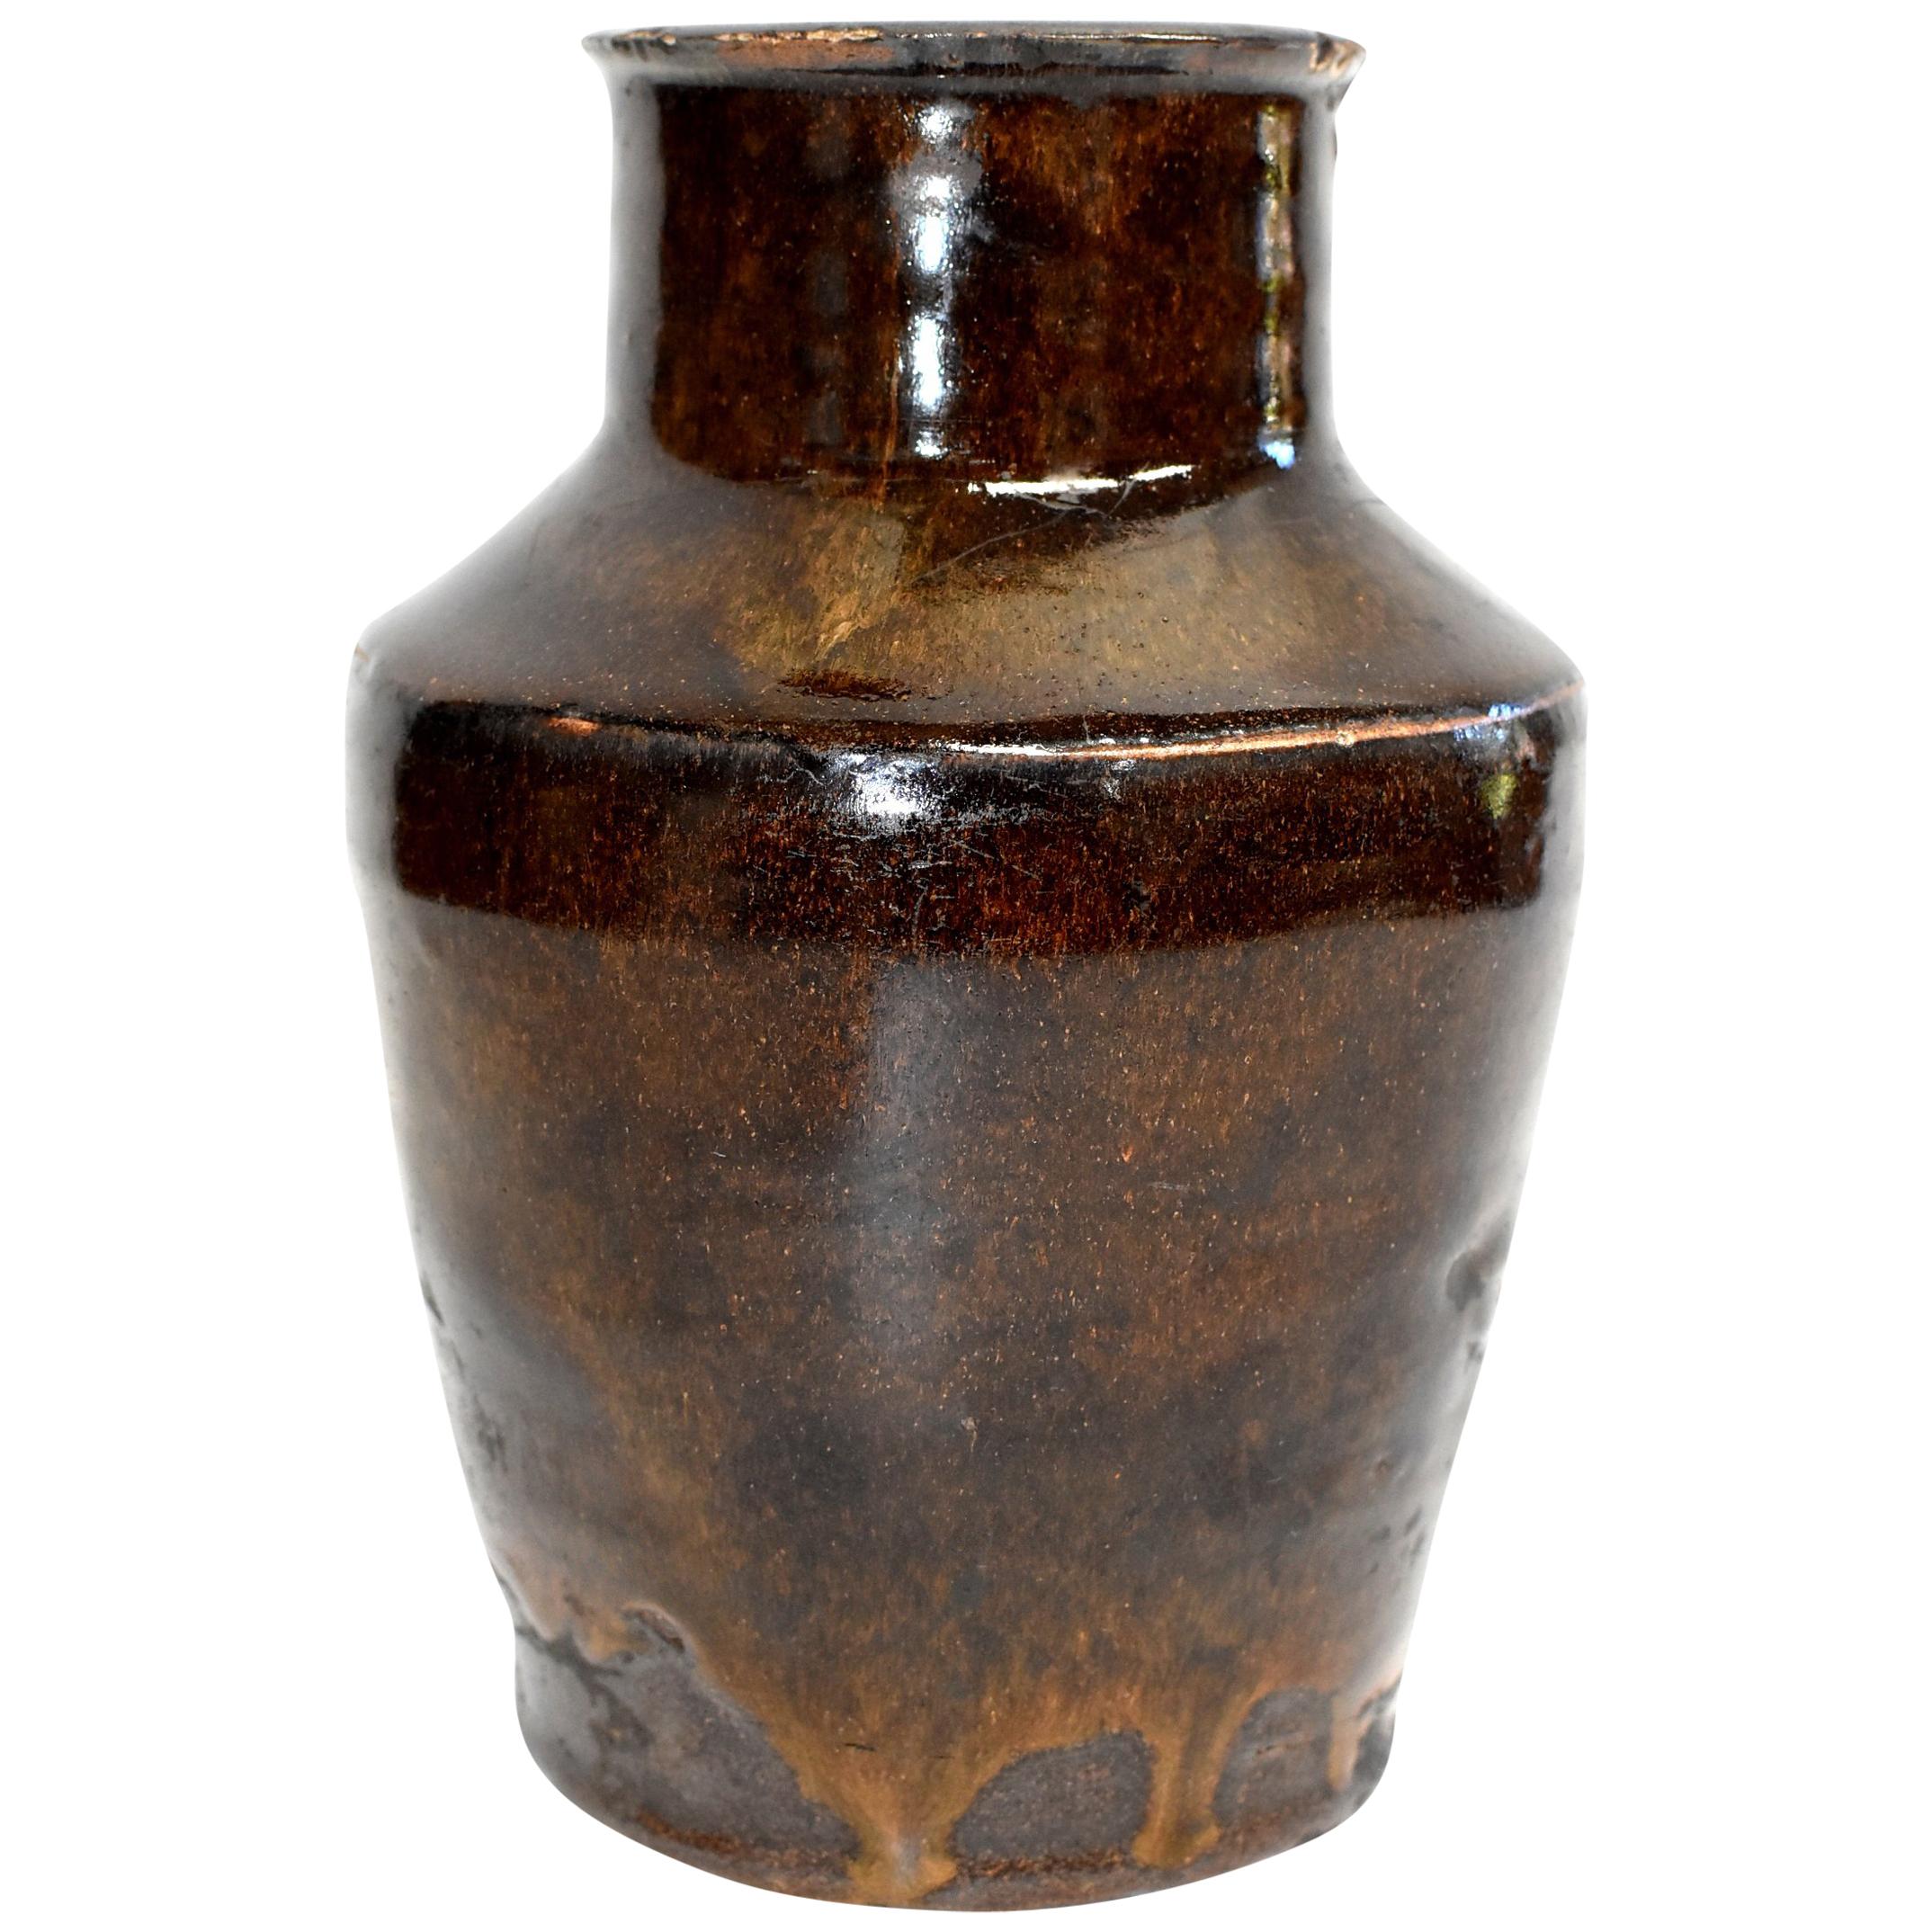 Antique Pottery Jar, with Golden Glaze